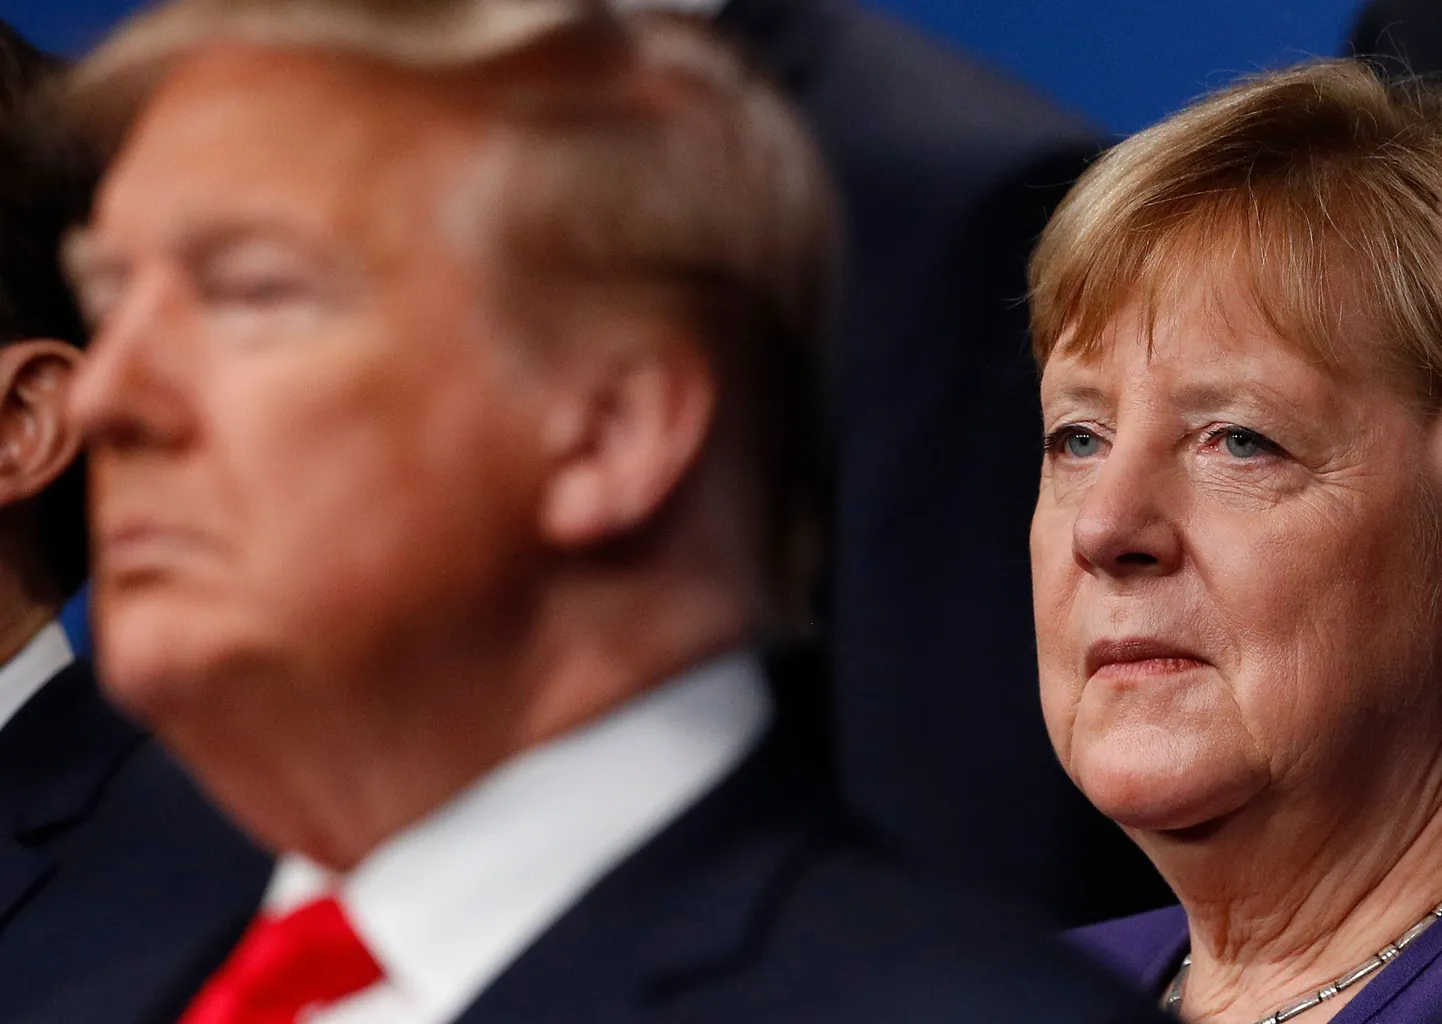 Saksa kantsler Angela Merkel ja USA president Donald Trump 4. detsembril 2019 NATO tippkohtumisel.